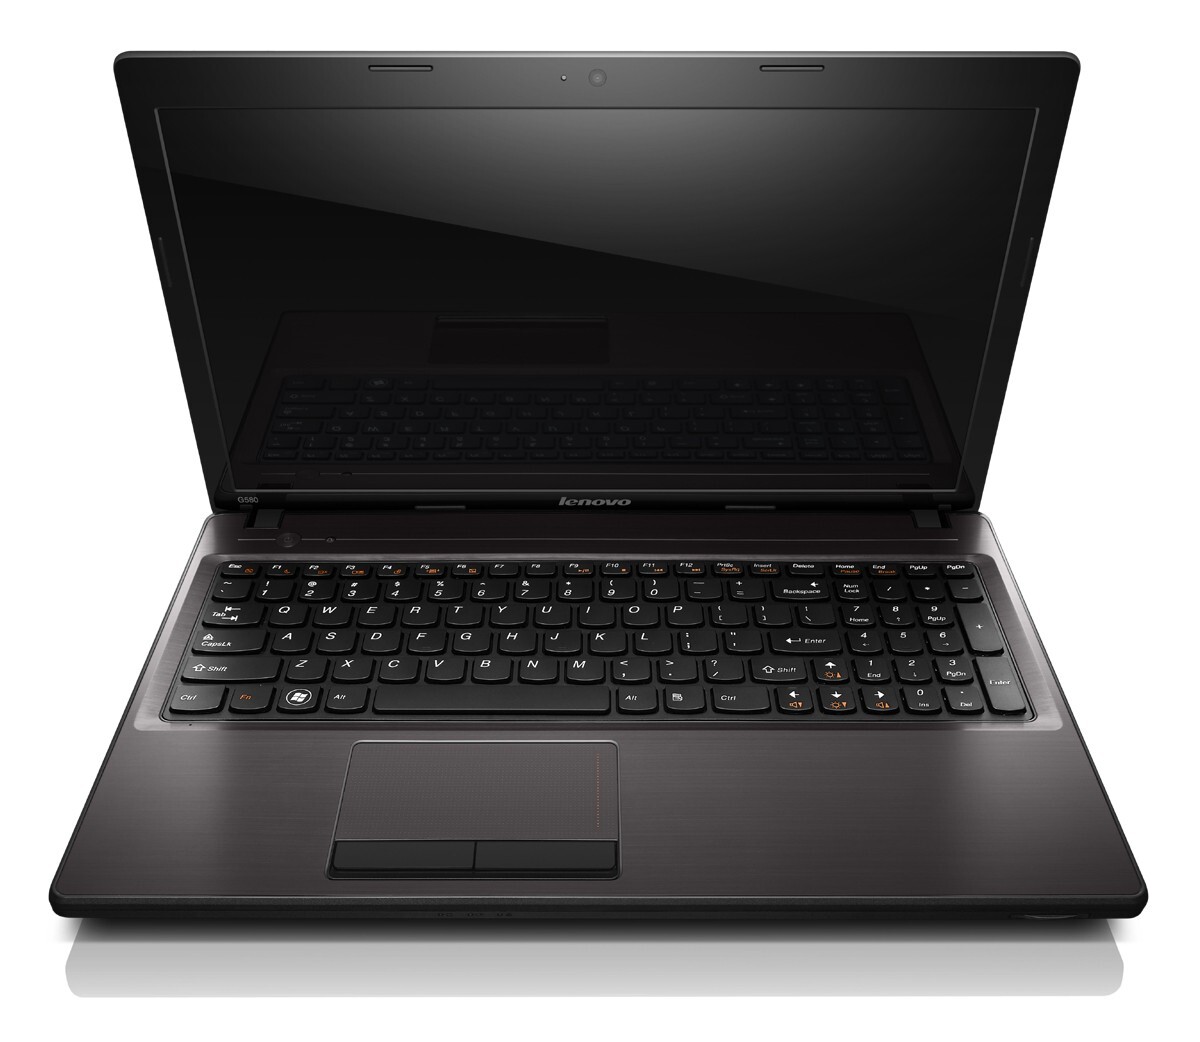 Laptop Lenovo IdeaPad G580 (5936-6832) - Intel core i5-3230M 2.6GHz, 2GB RAM, 500GB HDD, VGA Intel HD Graphics 4000, 15.6 inch